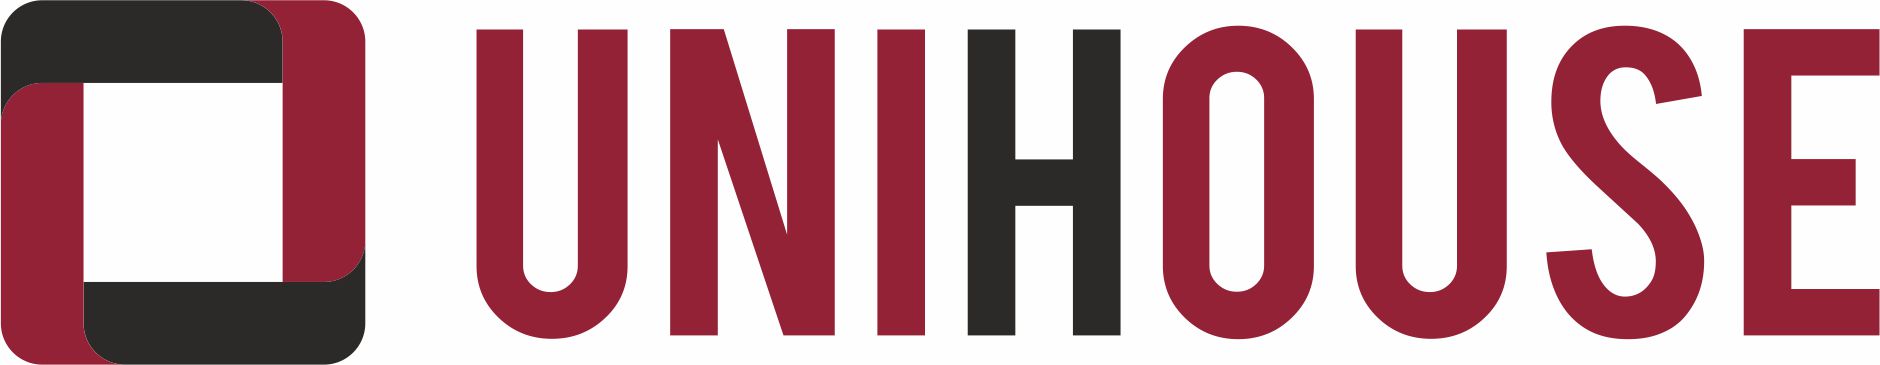 Unihouse_logo(1)